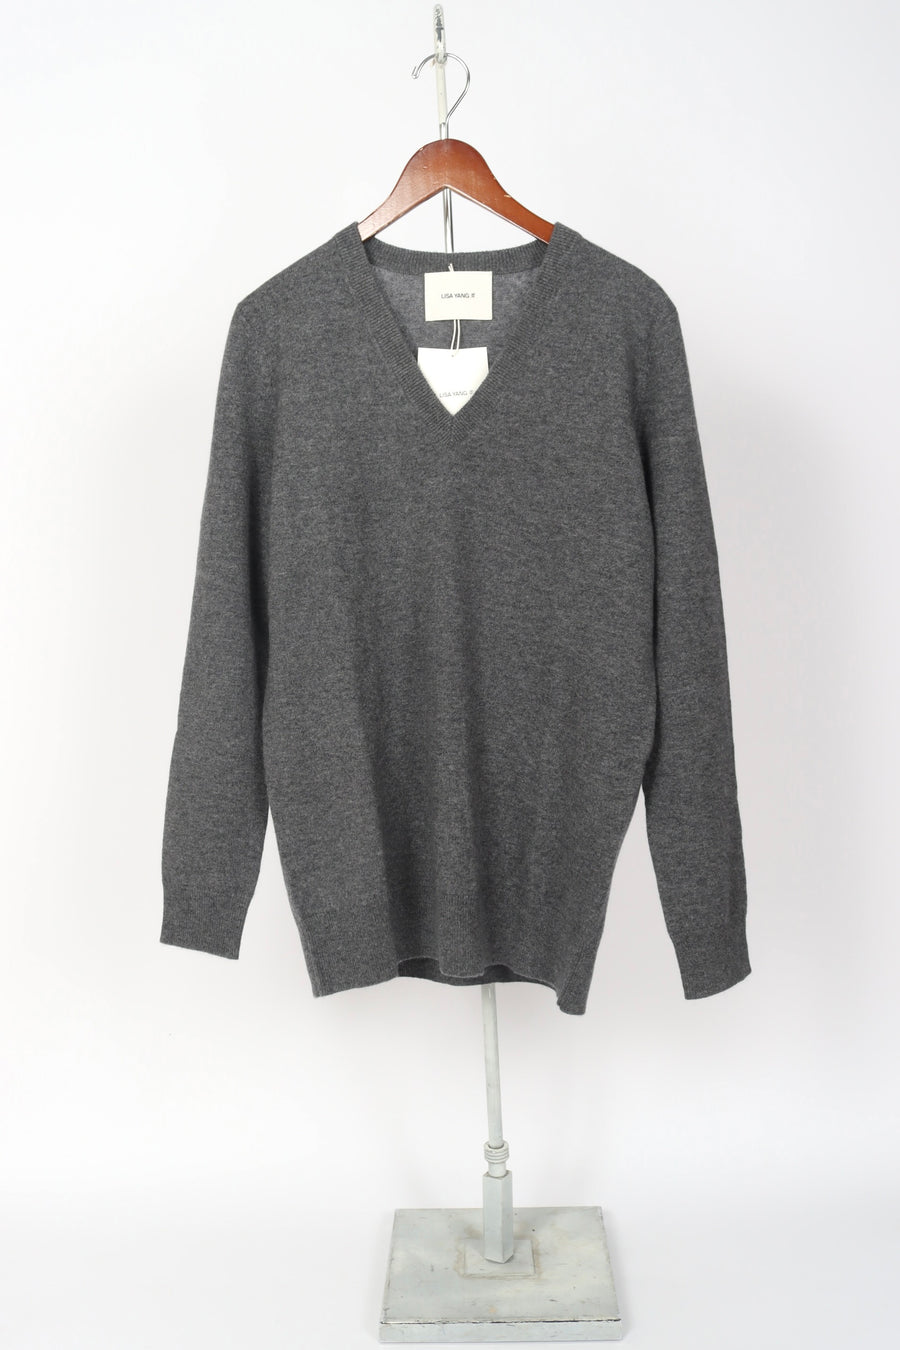 Maeve Sweater - Graphite